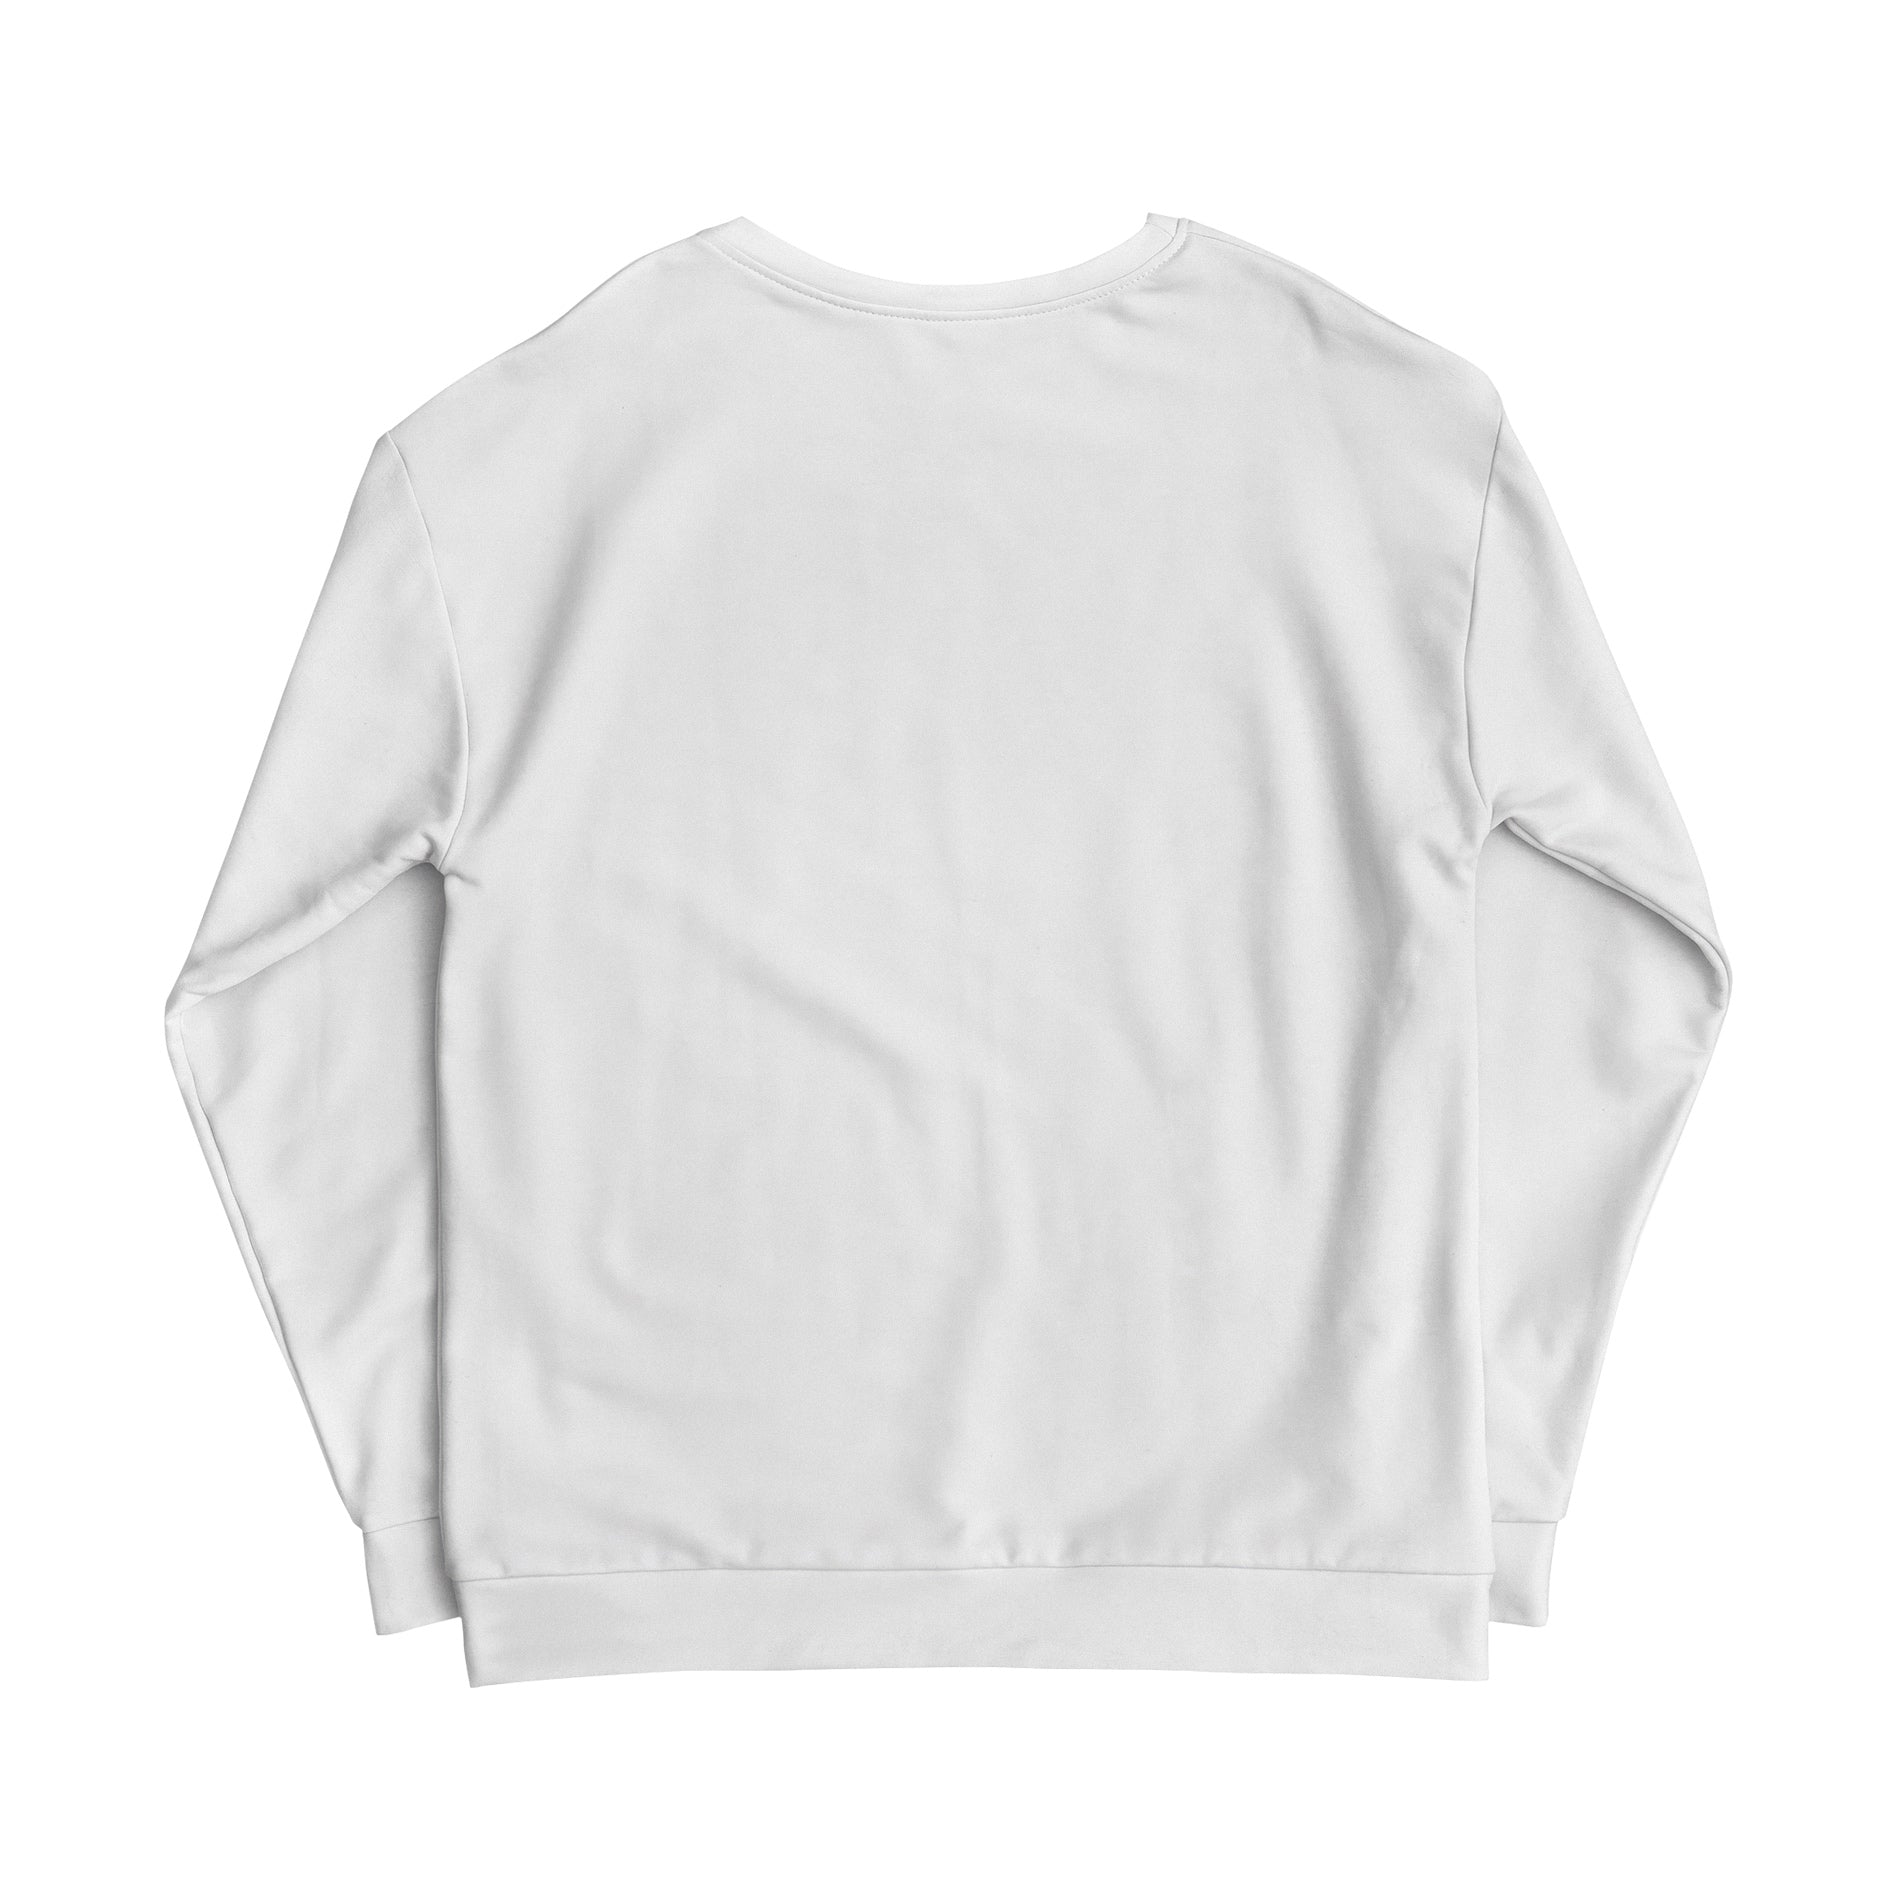 Digital Pixel sweater